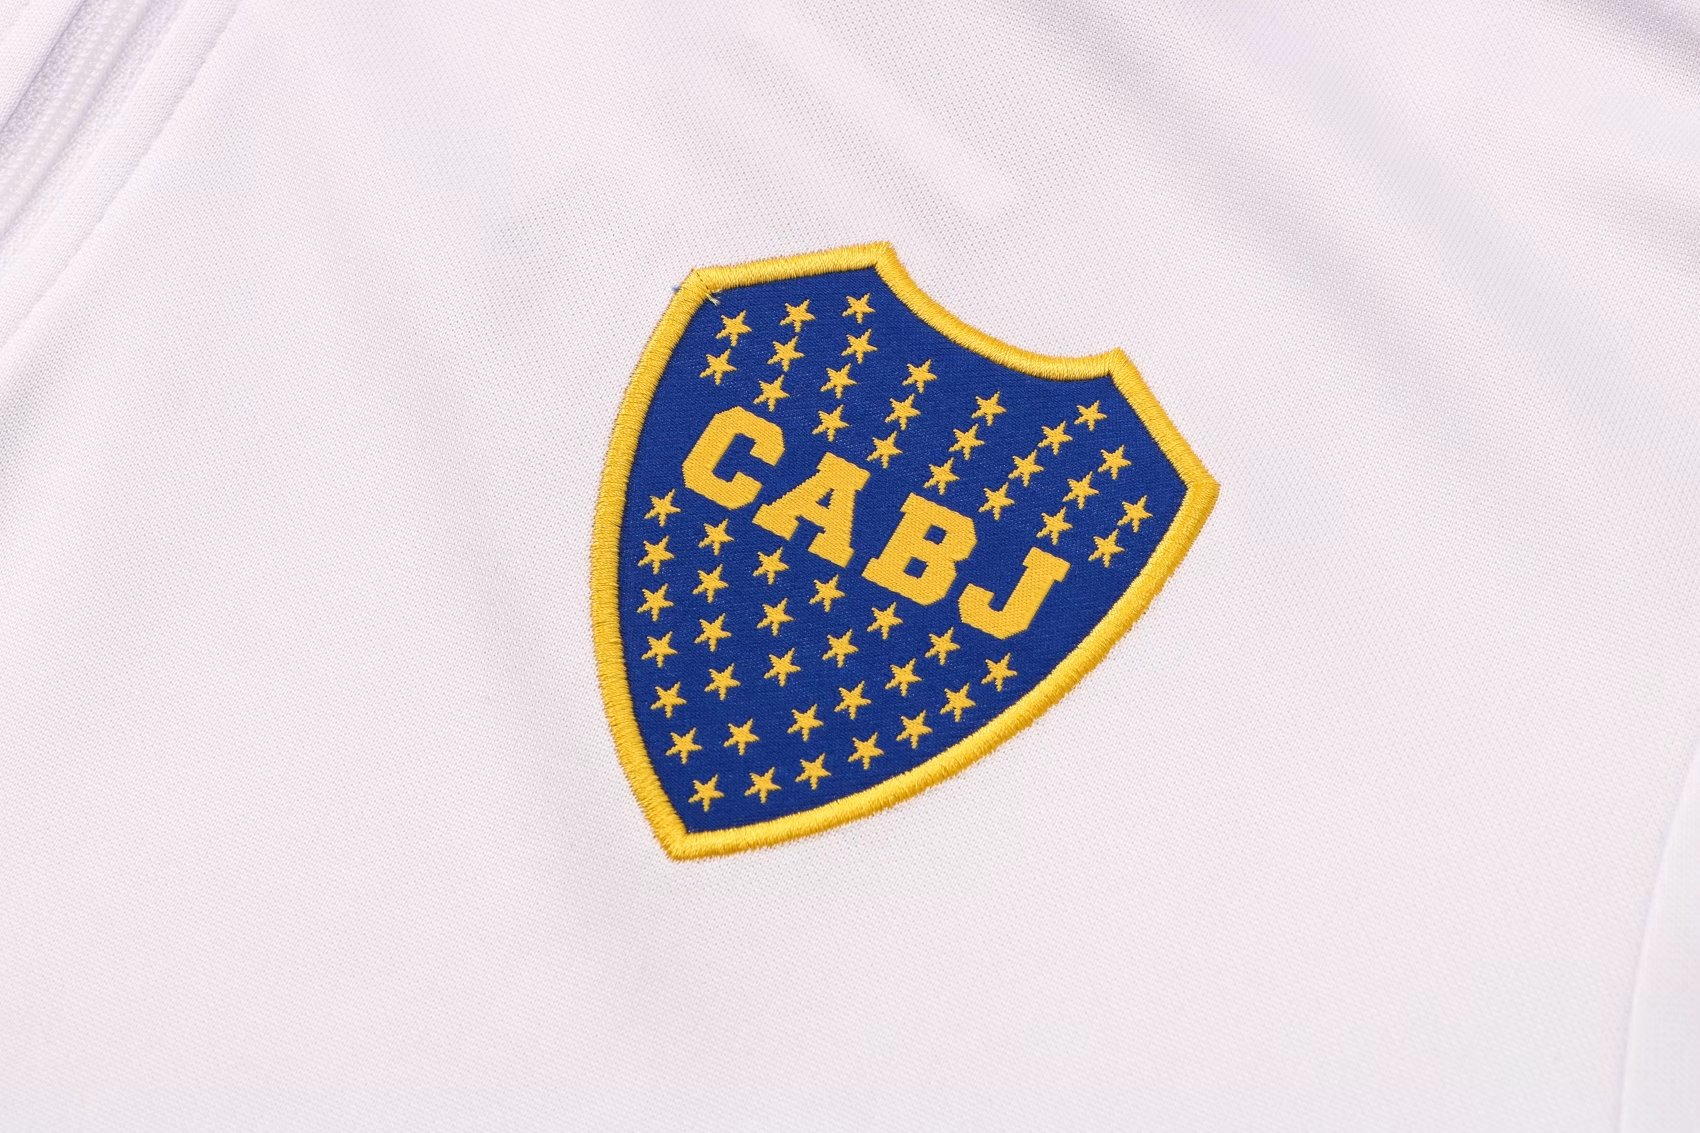 Boca Juniors Soccer Training Suit White Mens 2021/22